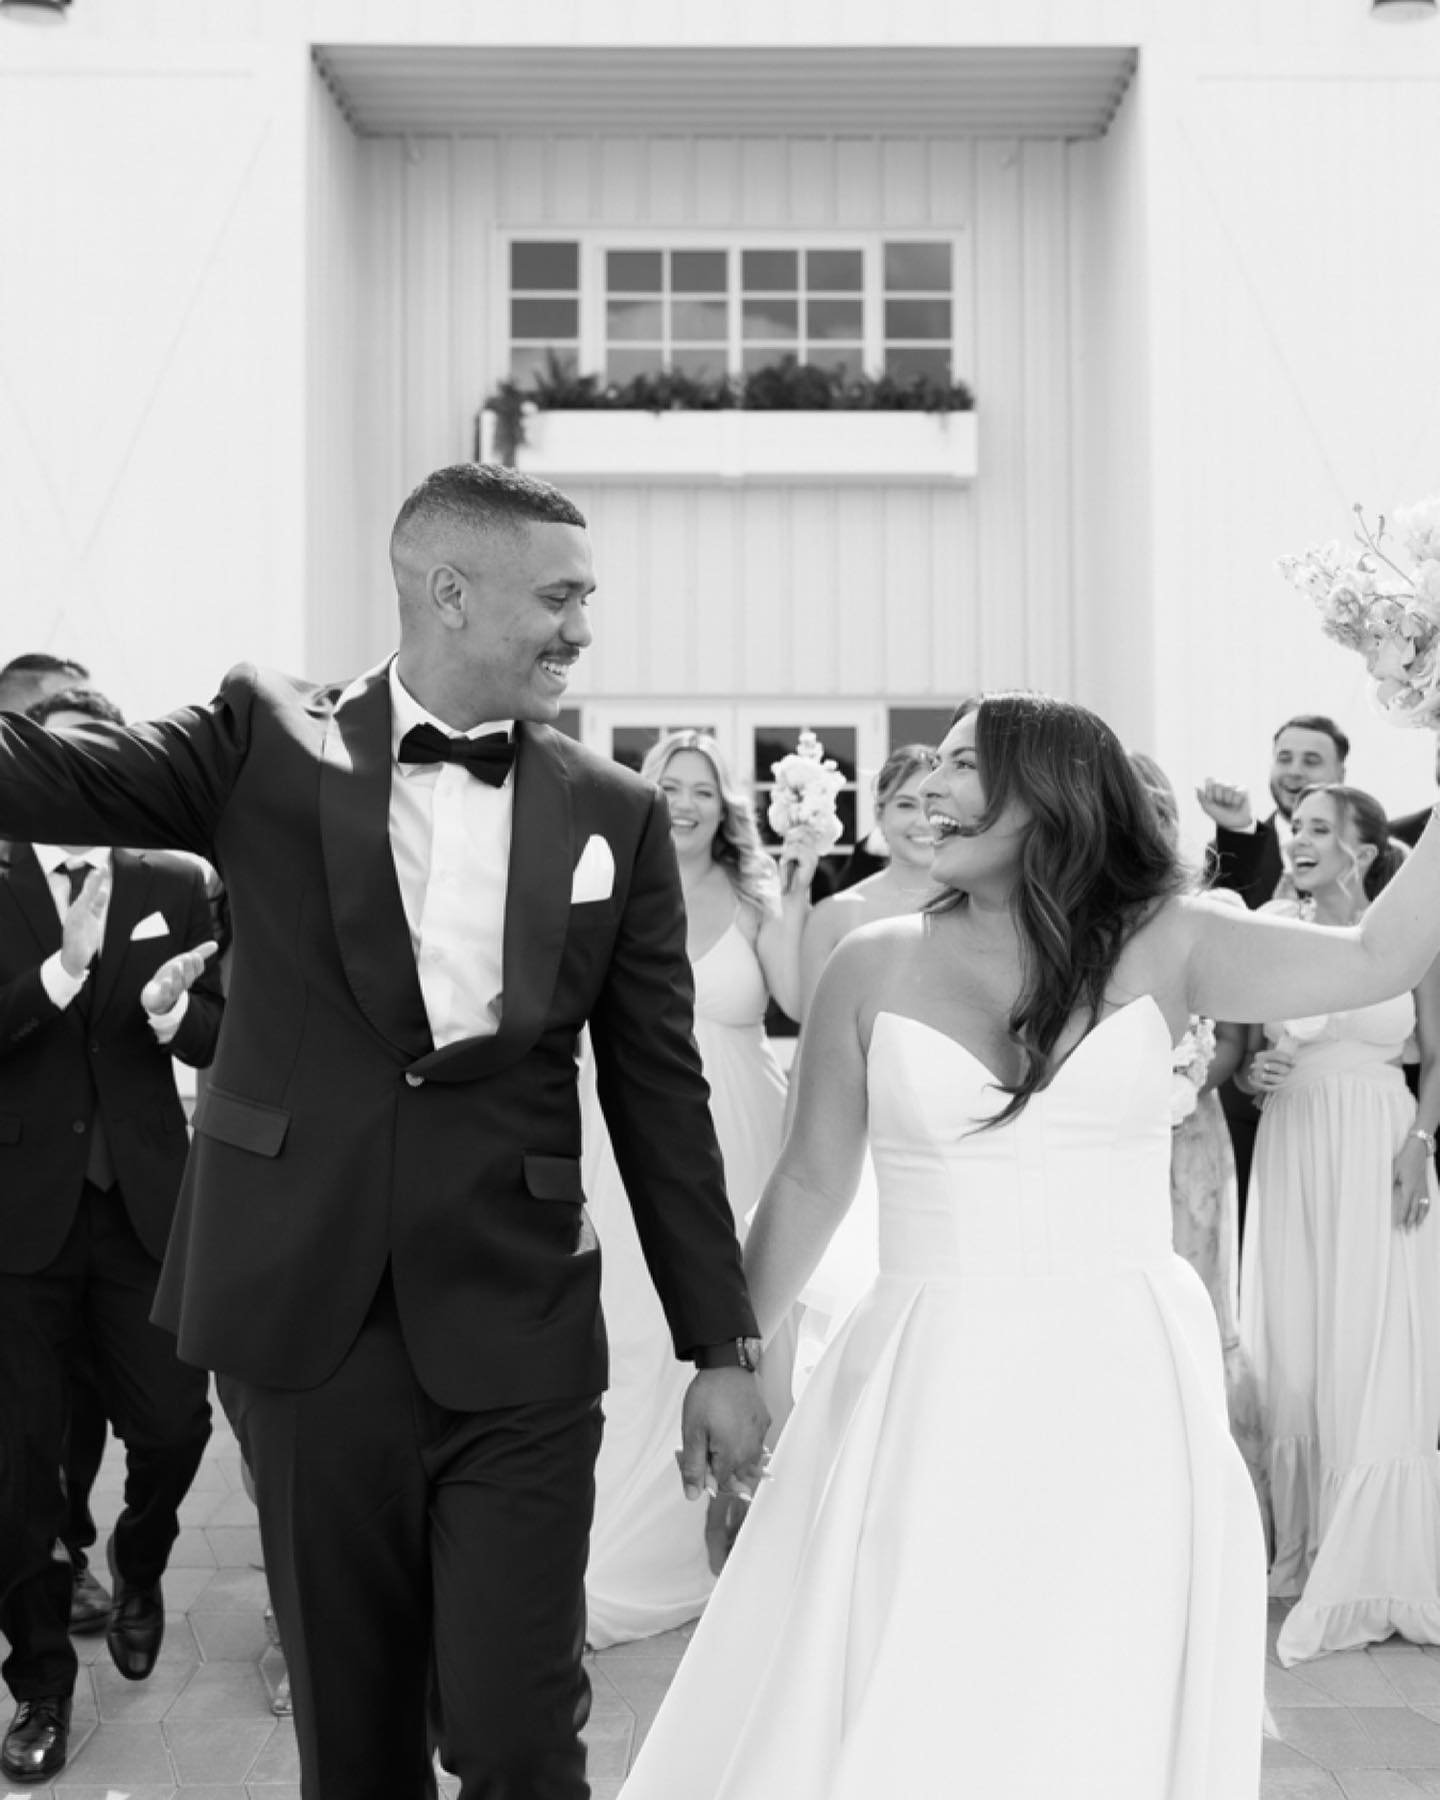 Natalie &amp; Cameron 🤍
#miamiphotographer 
#wedding